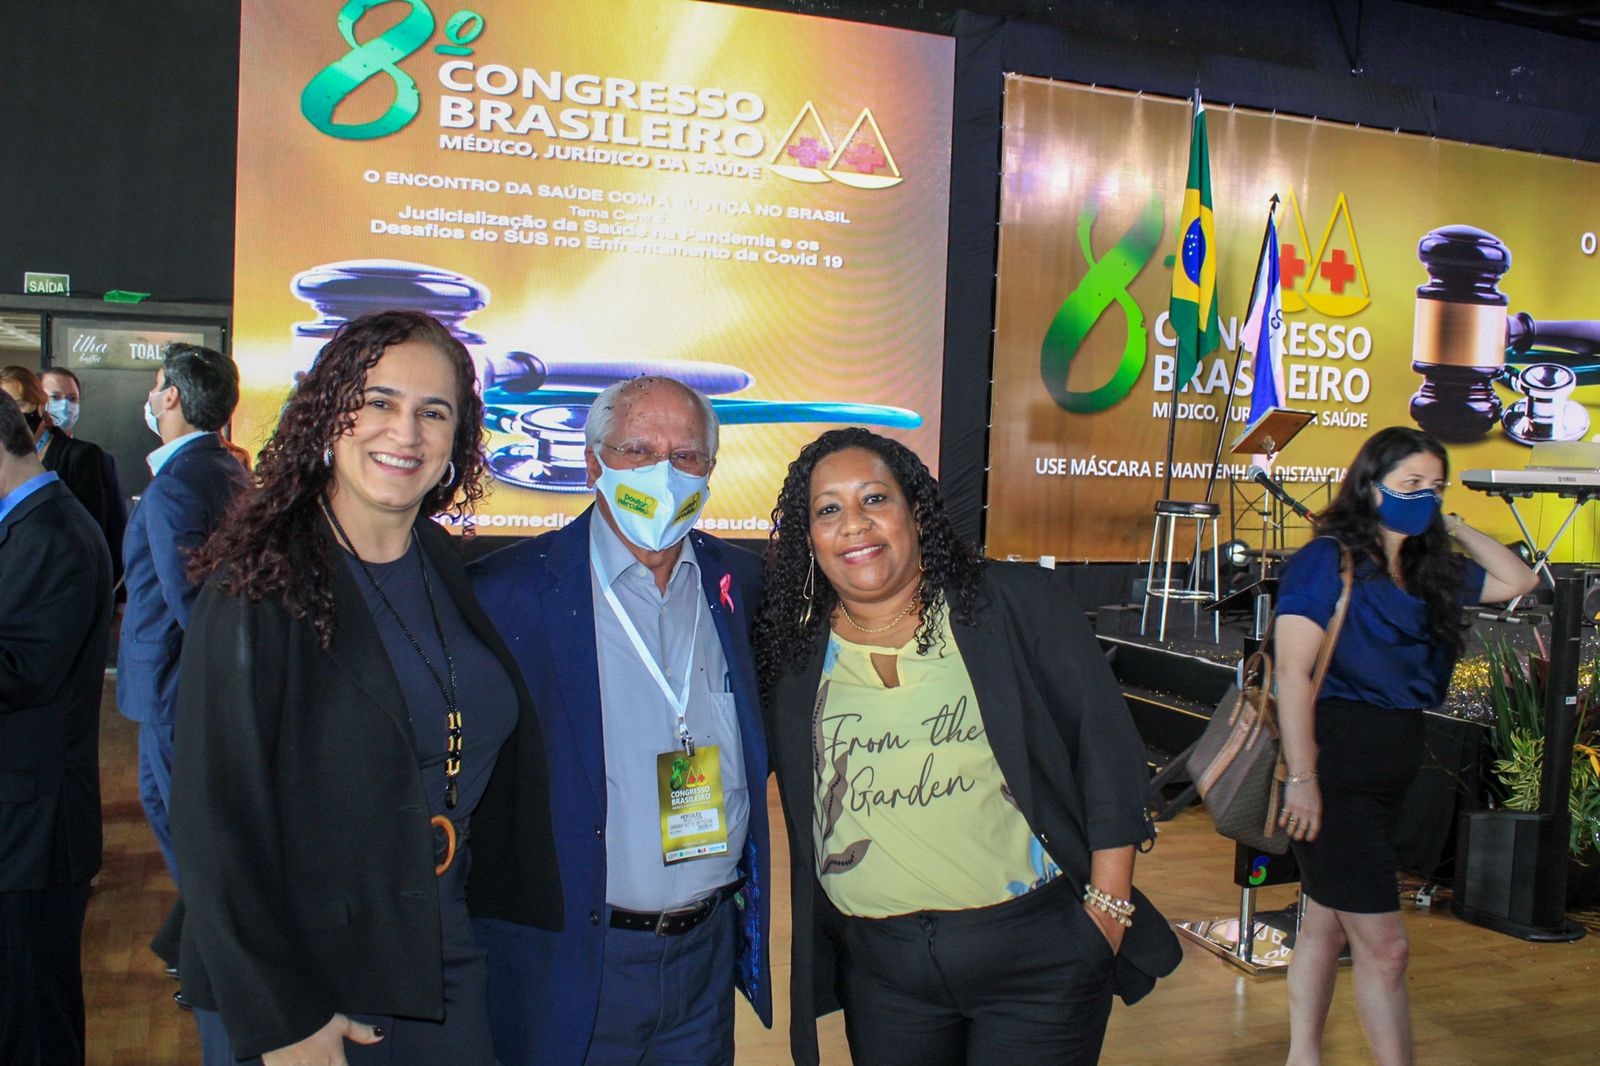 8 congresso brasileiro medico juridico da saude 11